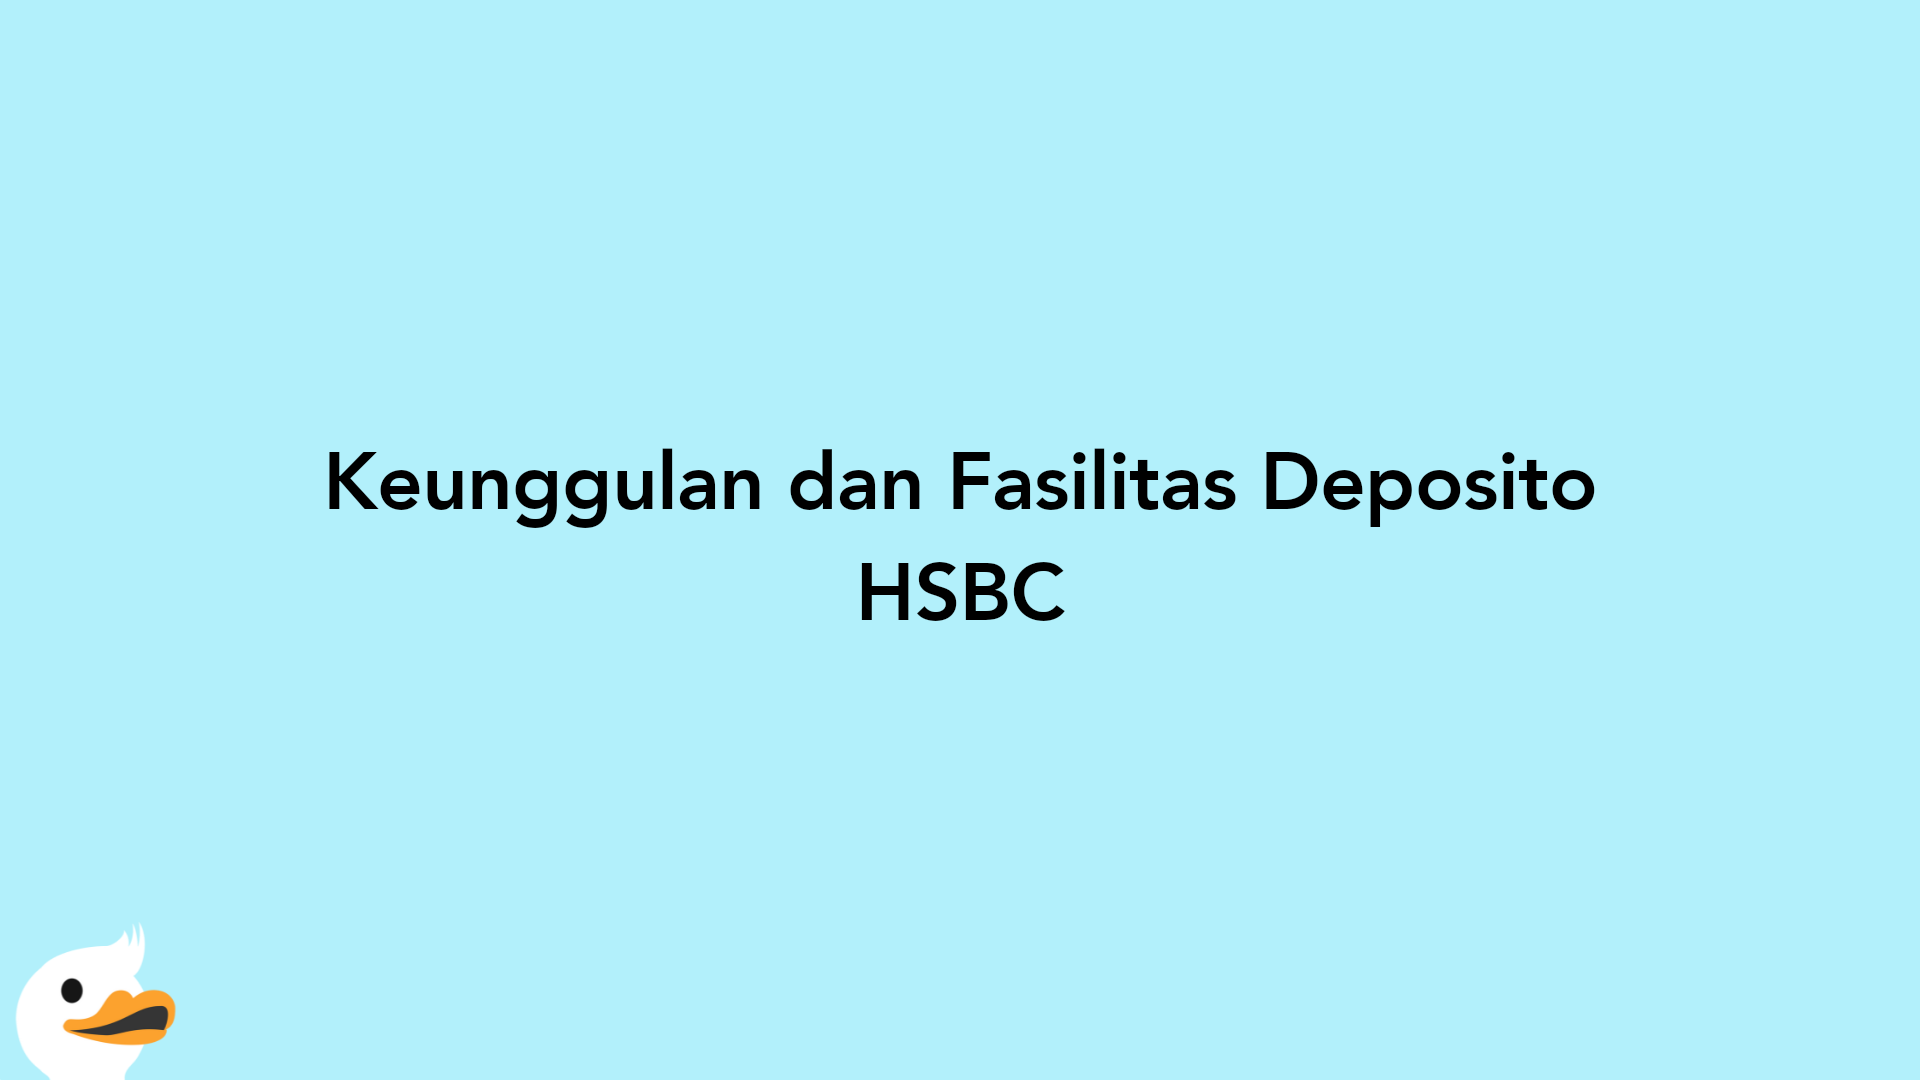 Keunggulan dan Fasilitas Deposito HSBC